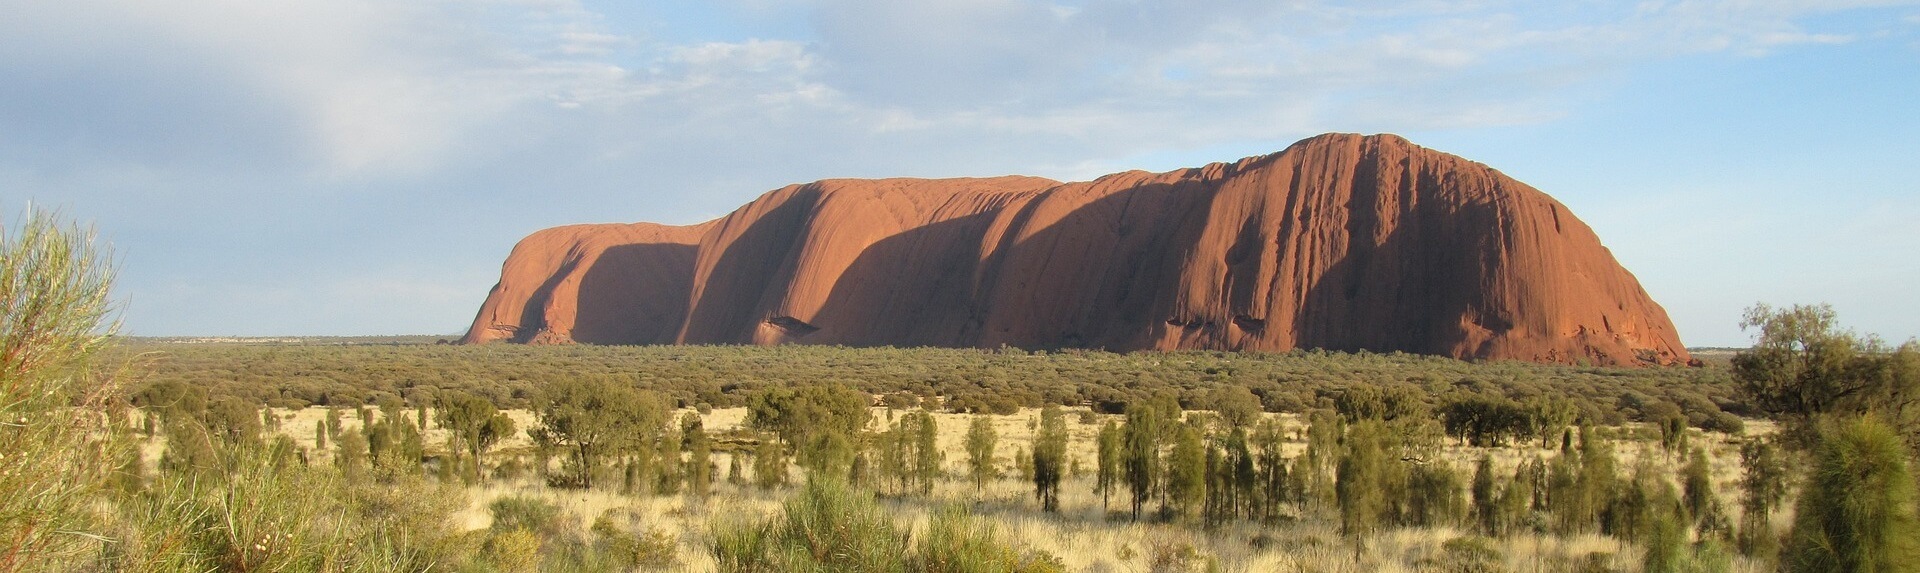 What time is the best to walk around Uluru?